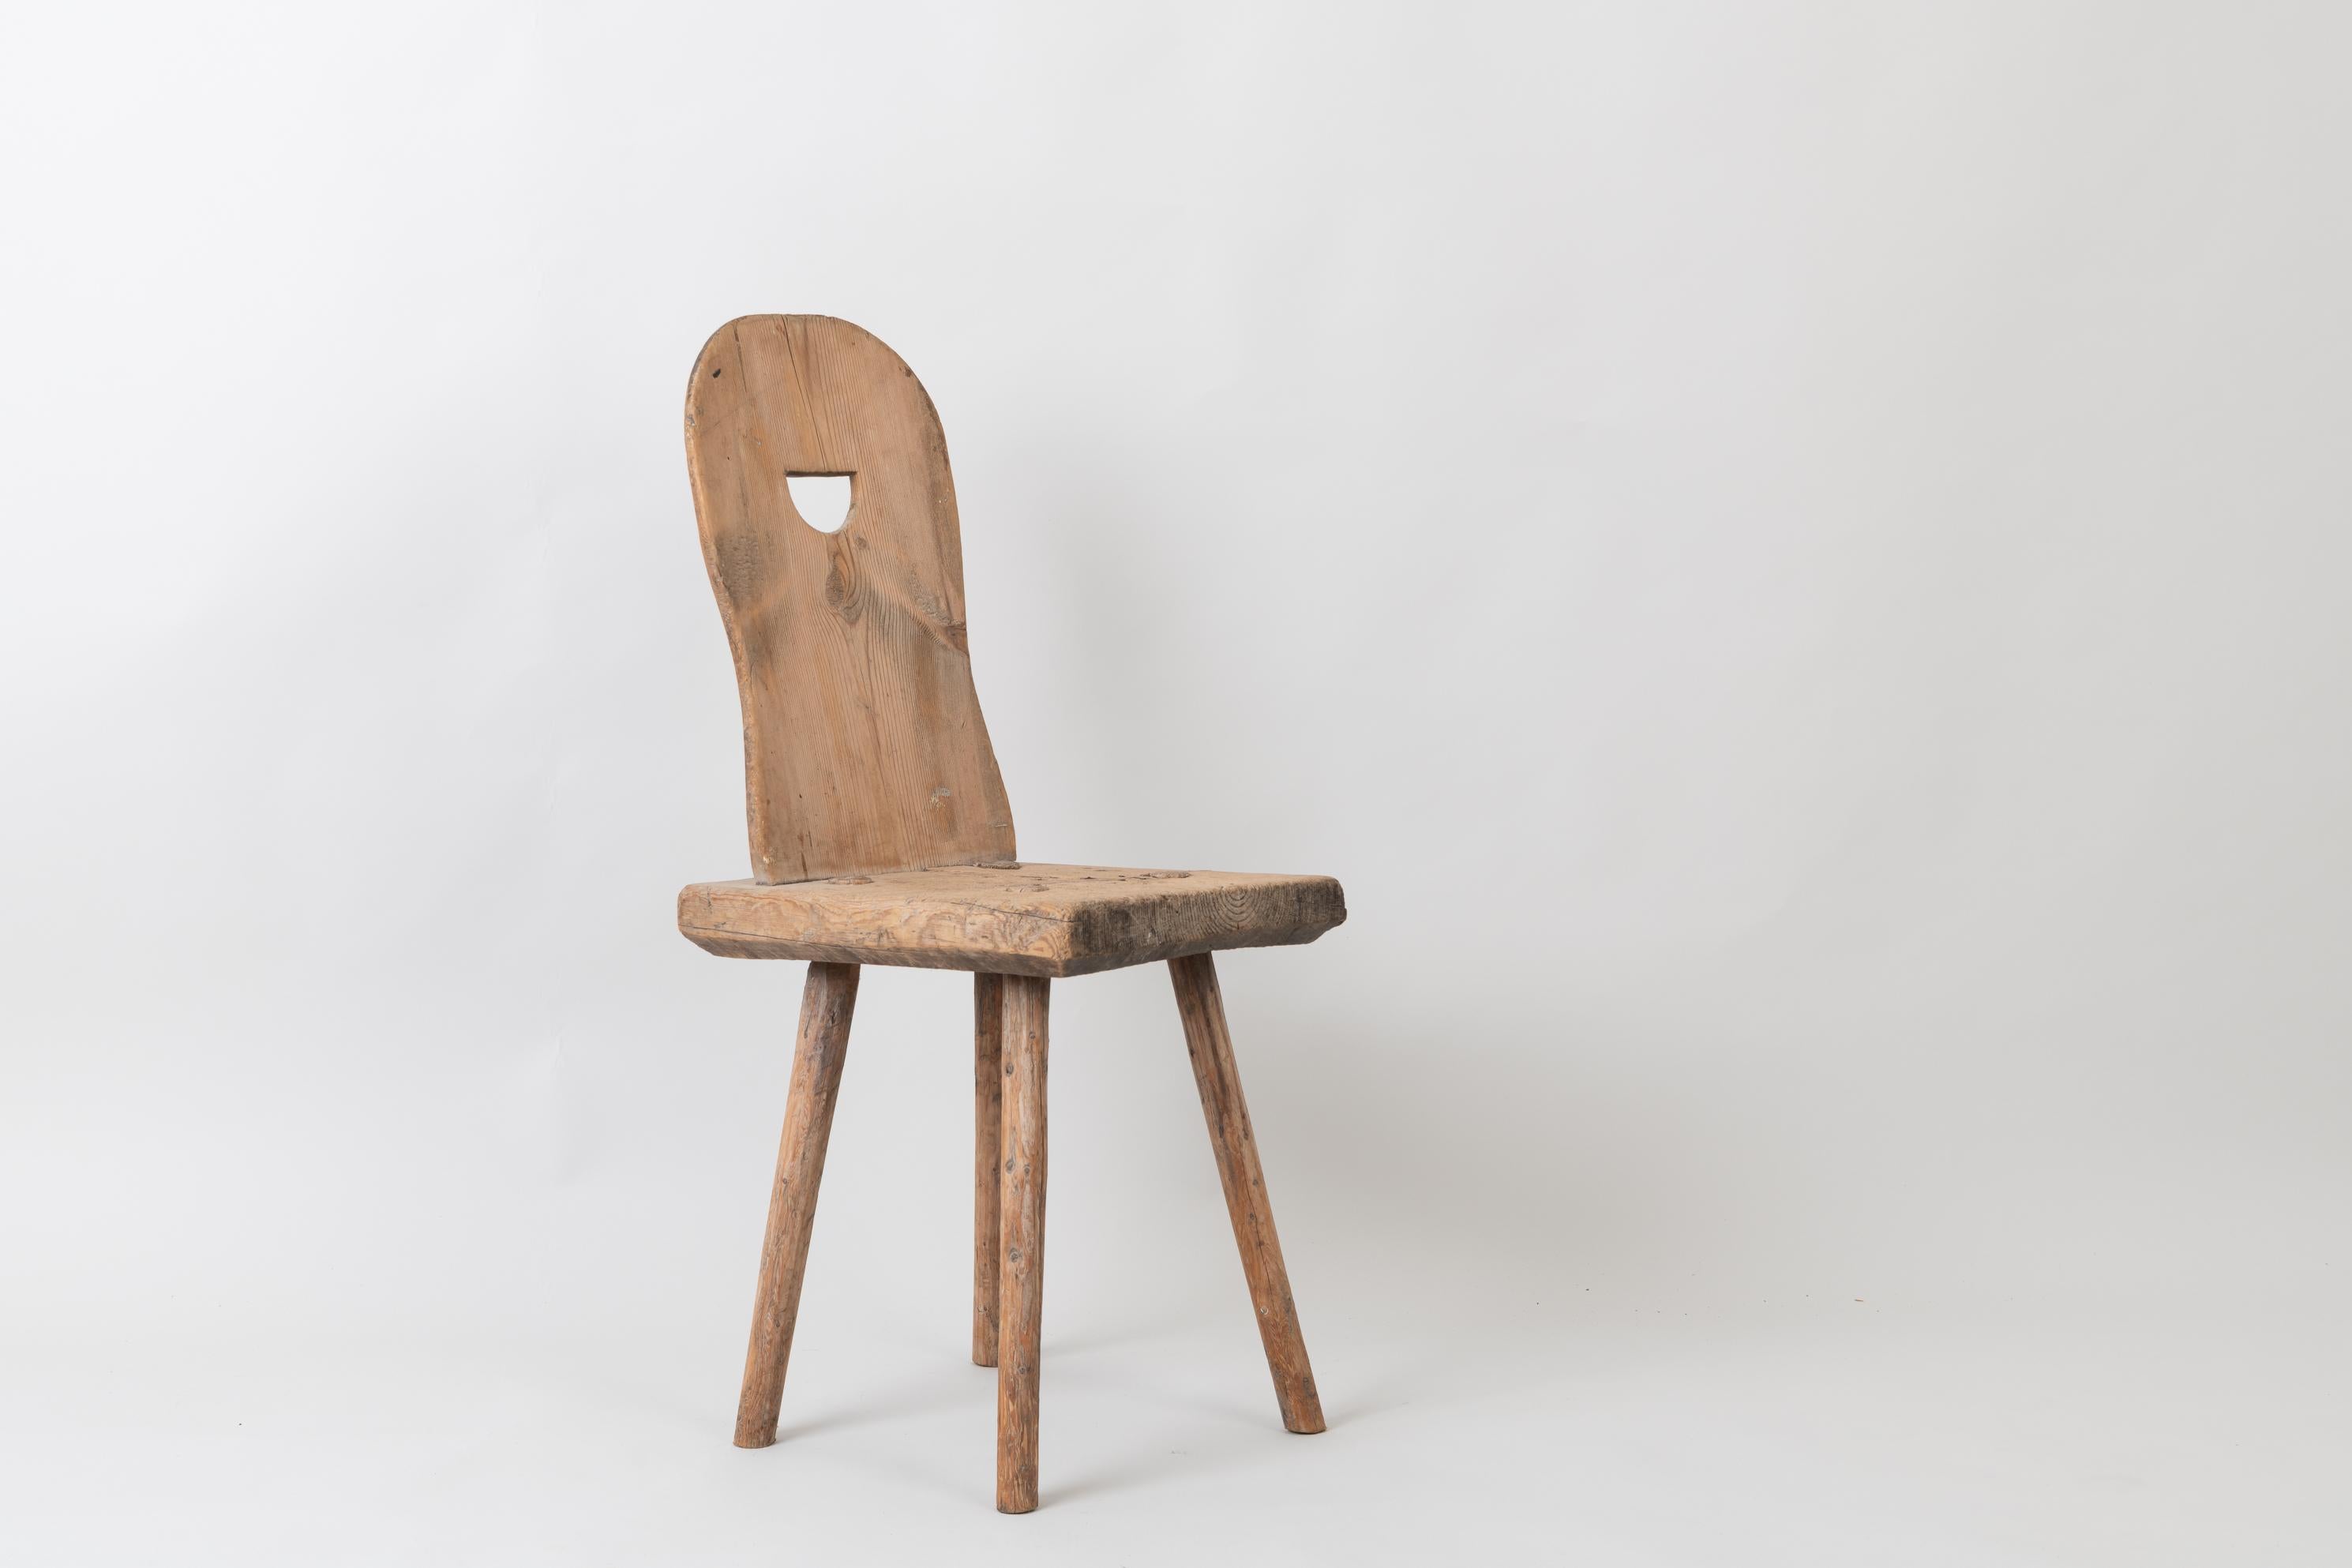 Hand-Crafted 19th Century Swedish Folk Art Rustic Chair